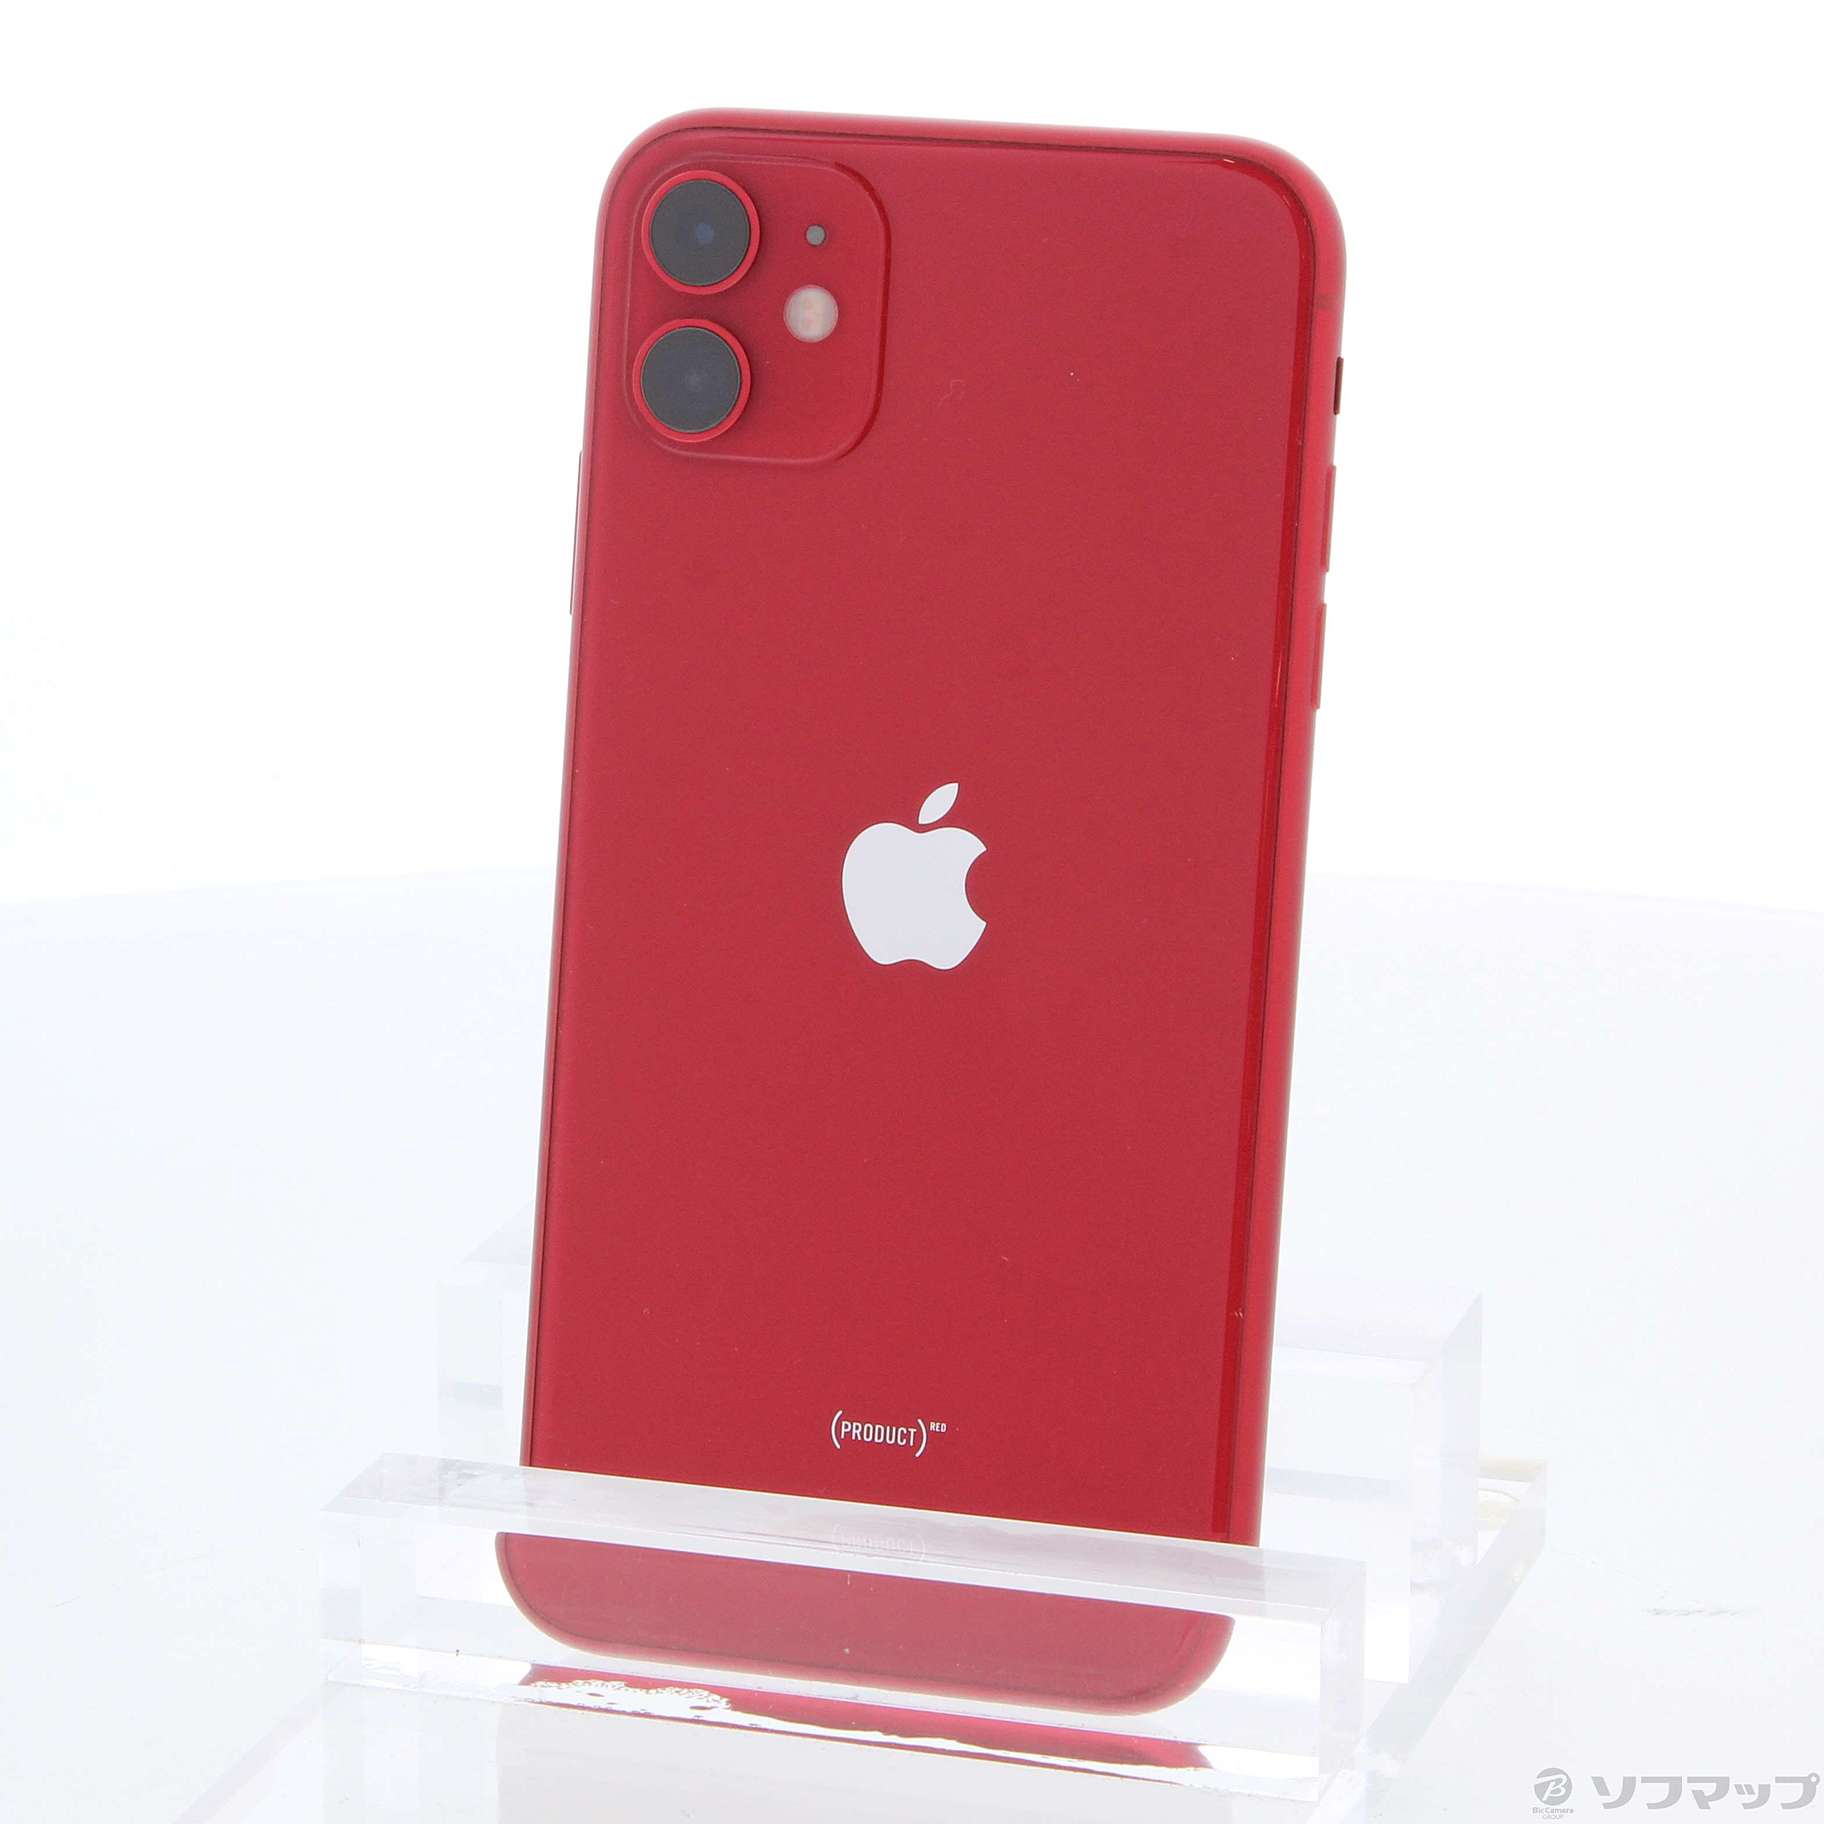 iPhone 11 (PRODUCT)RED 64GB SIMフリー [レッド] 中古(白ロム)価格